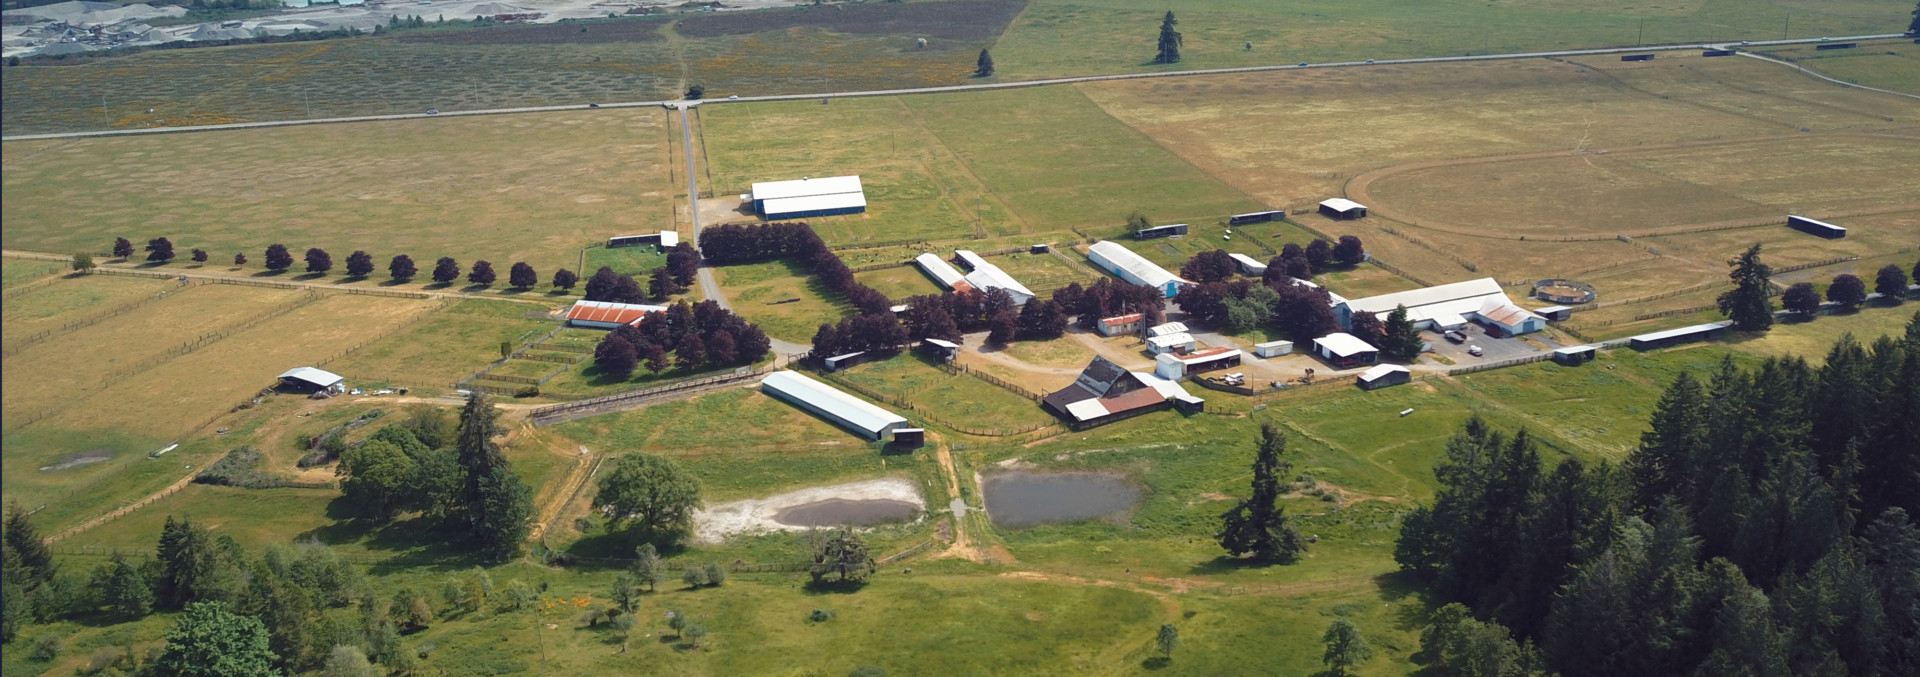 Washington Ranch for Sale Tenino Equine Center